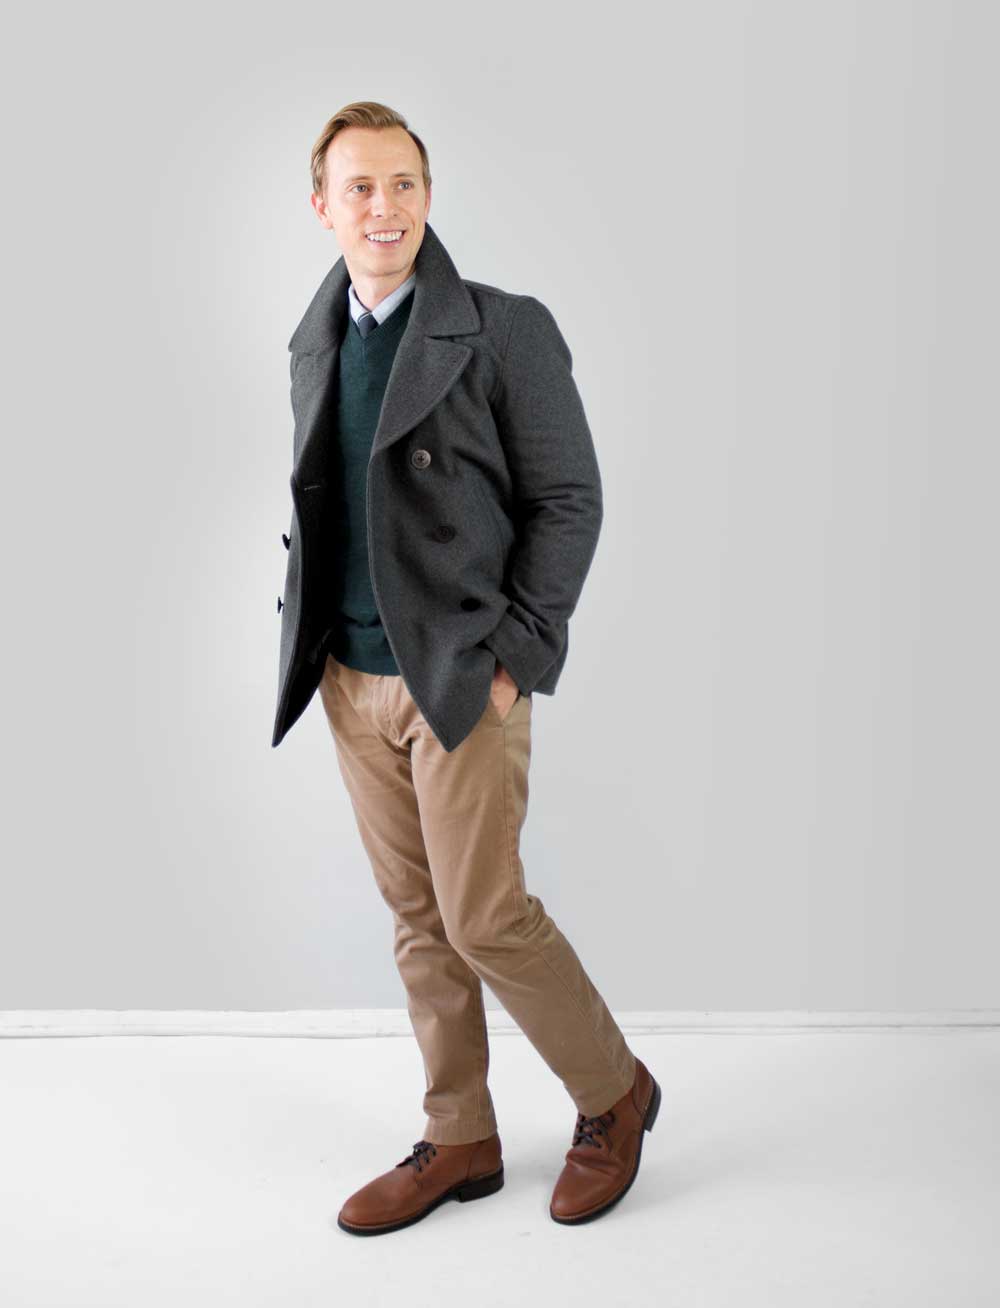 men business casual pea coat sweater tie khakis brown boots